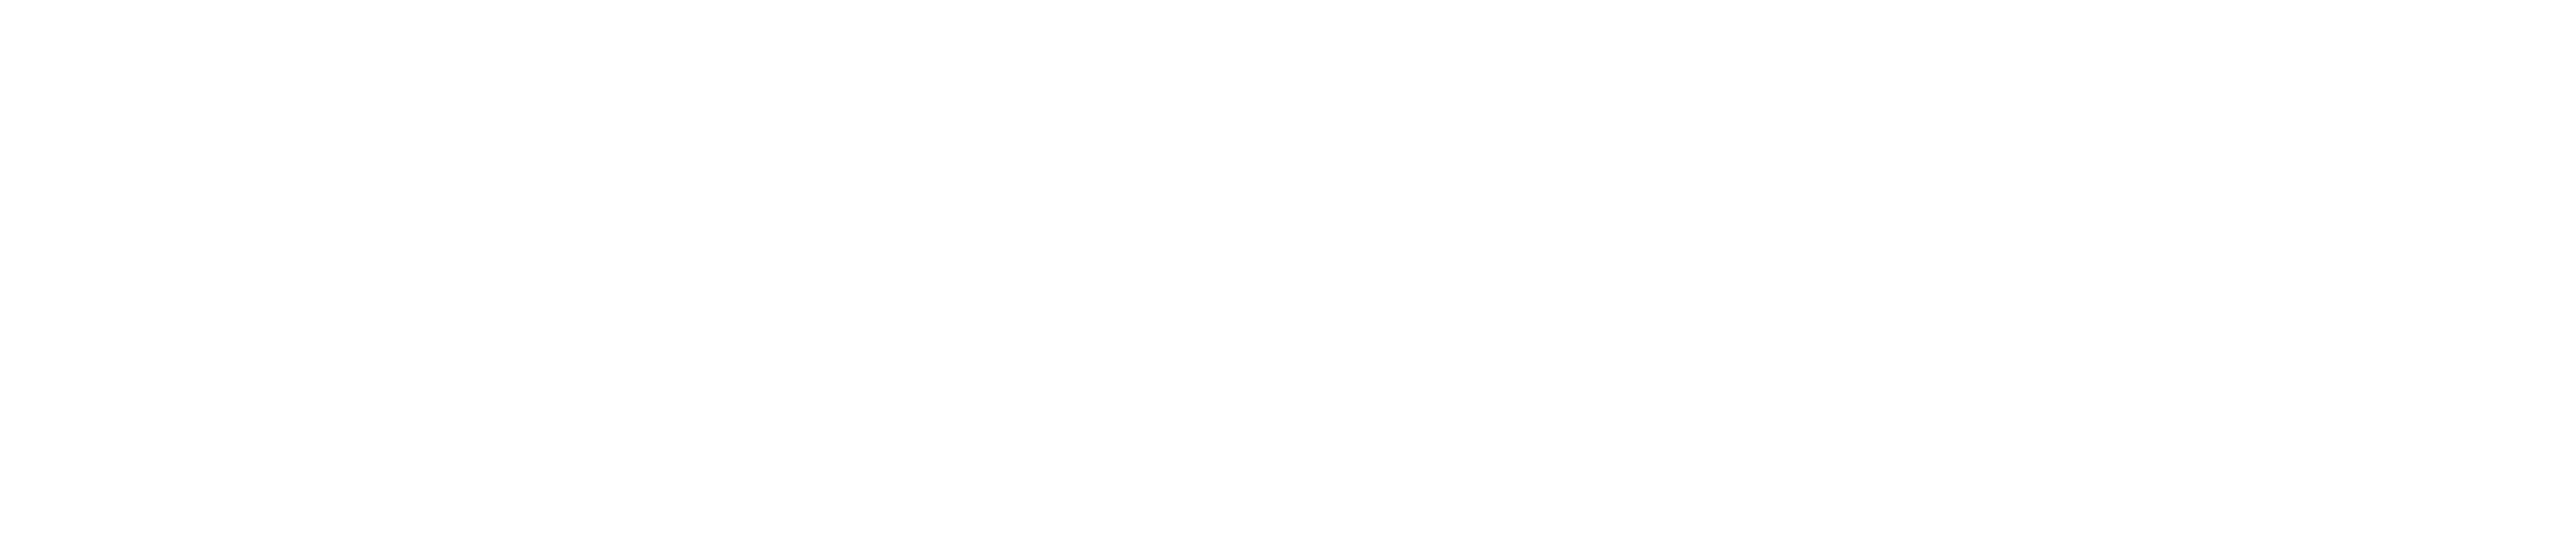 Institut Catalá de la Salut Logo